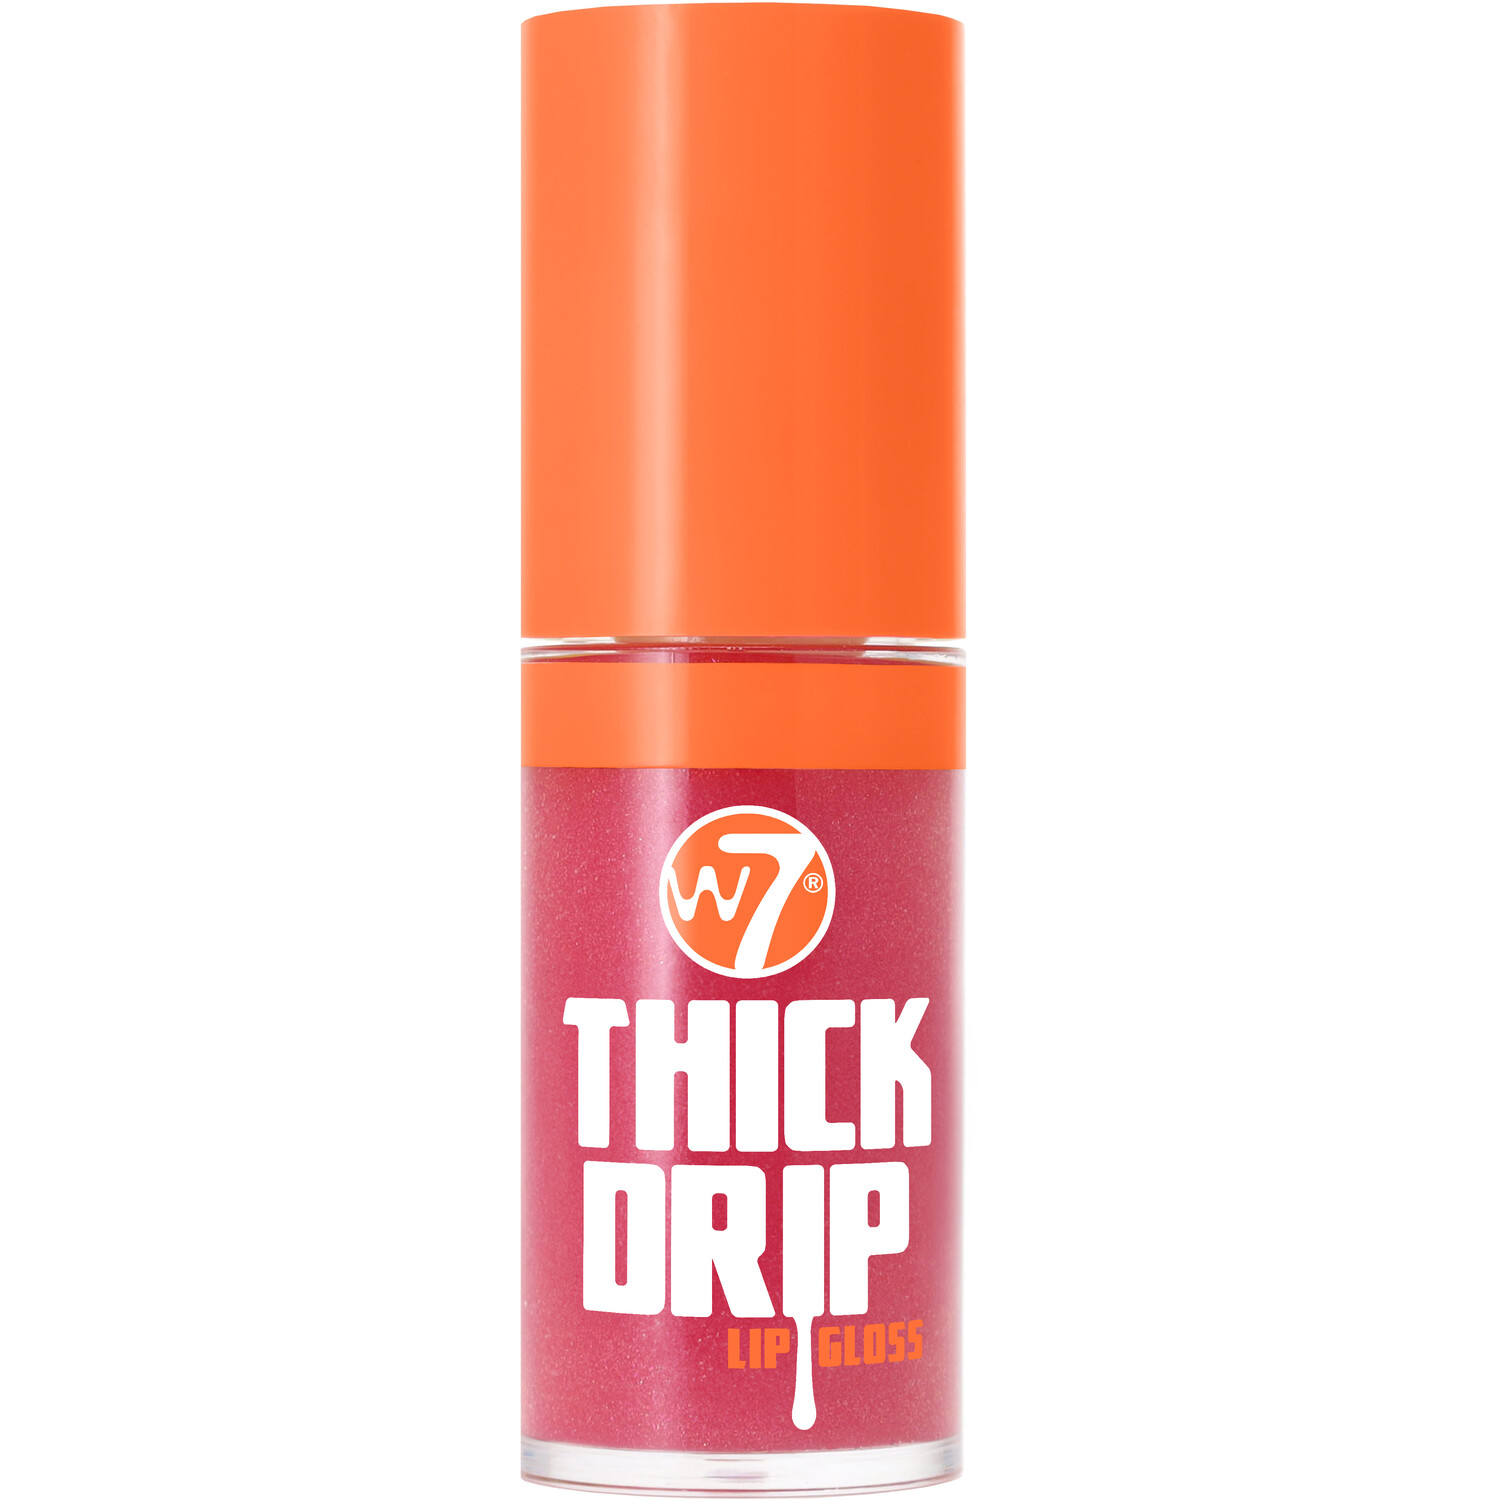 W7 Thick Drip Lip Gloss Image 1